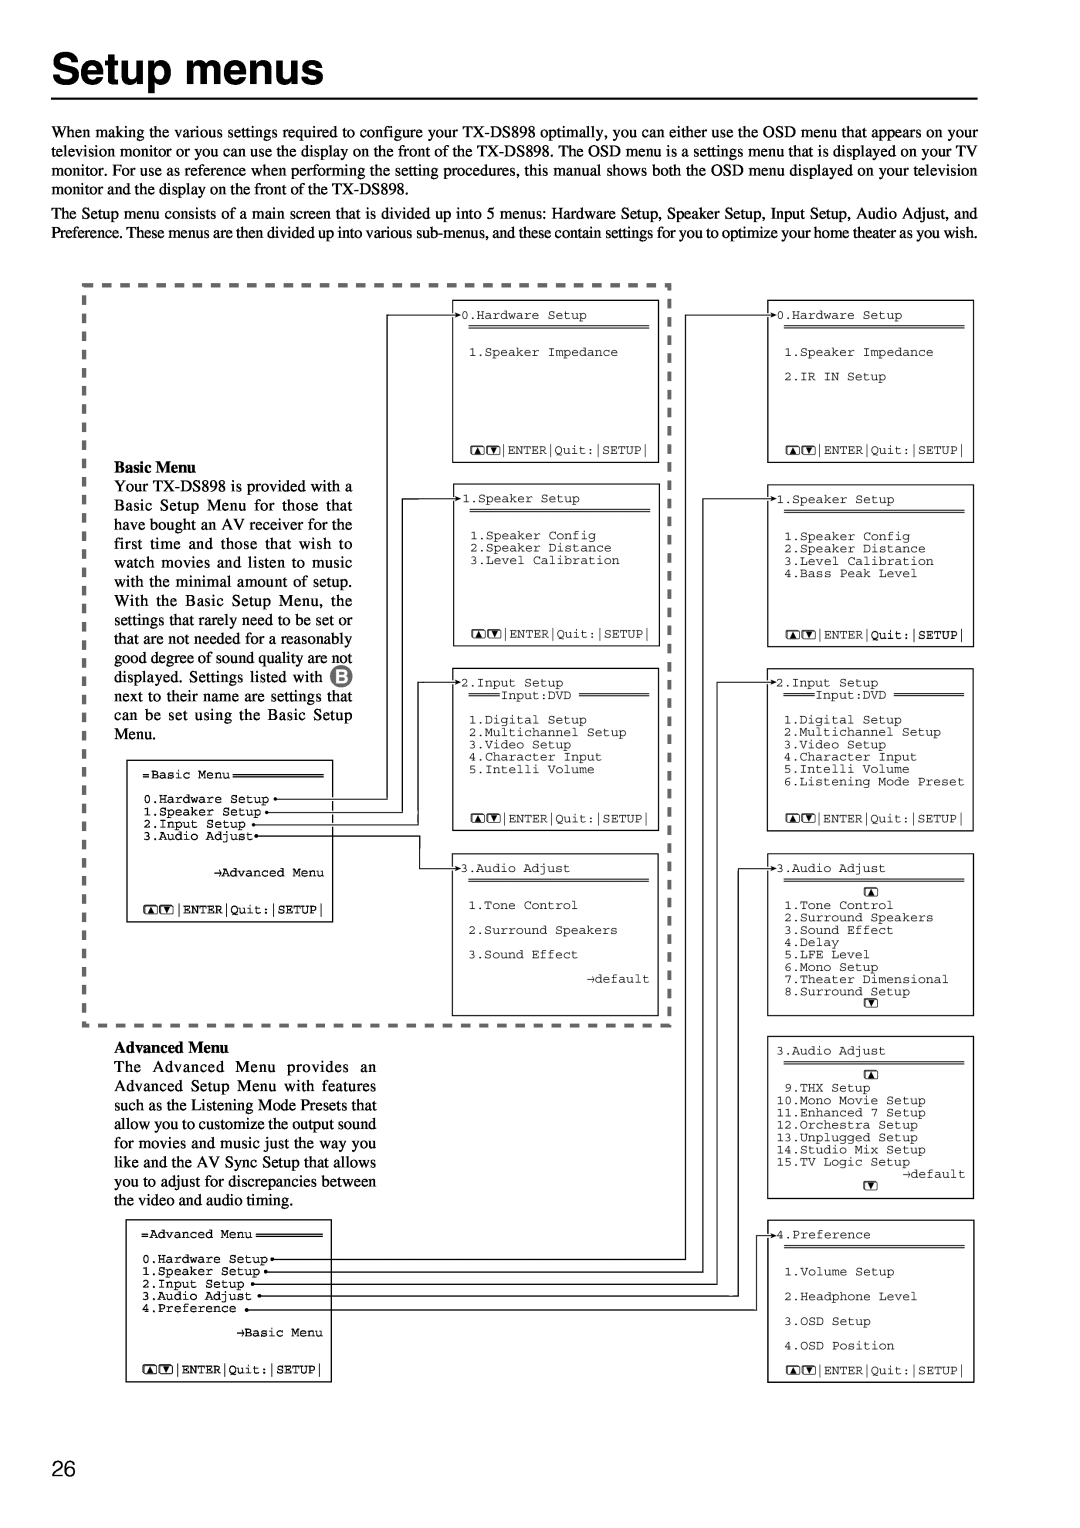 Onkyo TX-DS898 instruction manual Setup menus, Basic Menu, Advanced Menu 